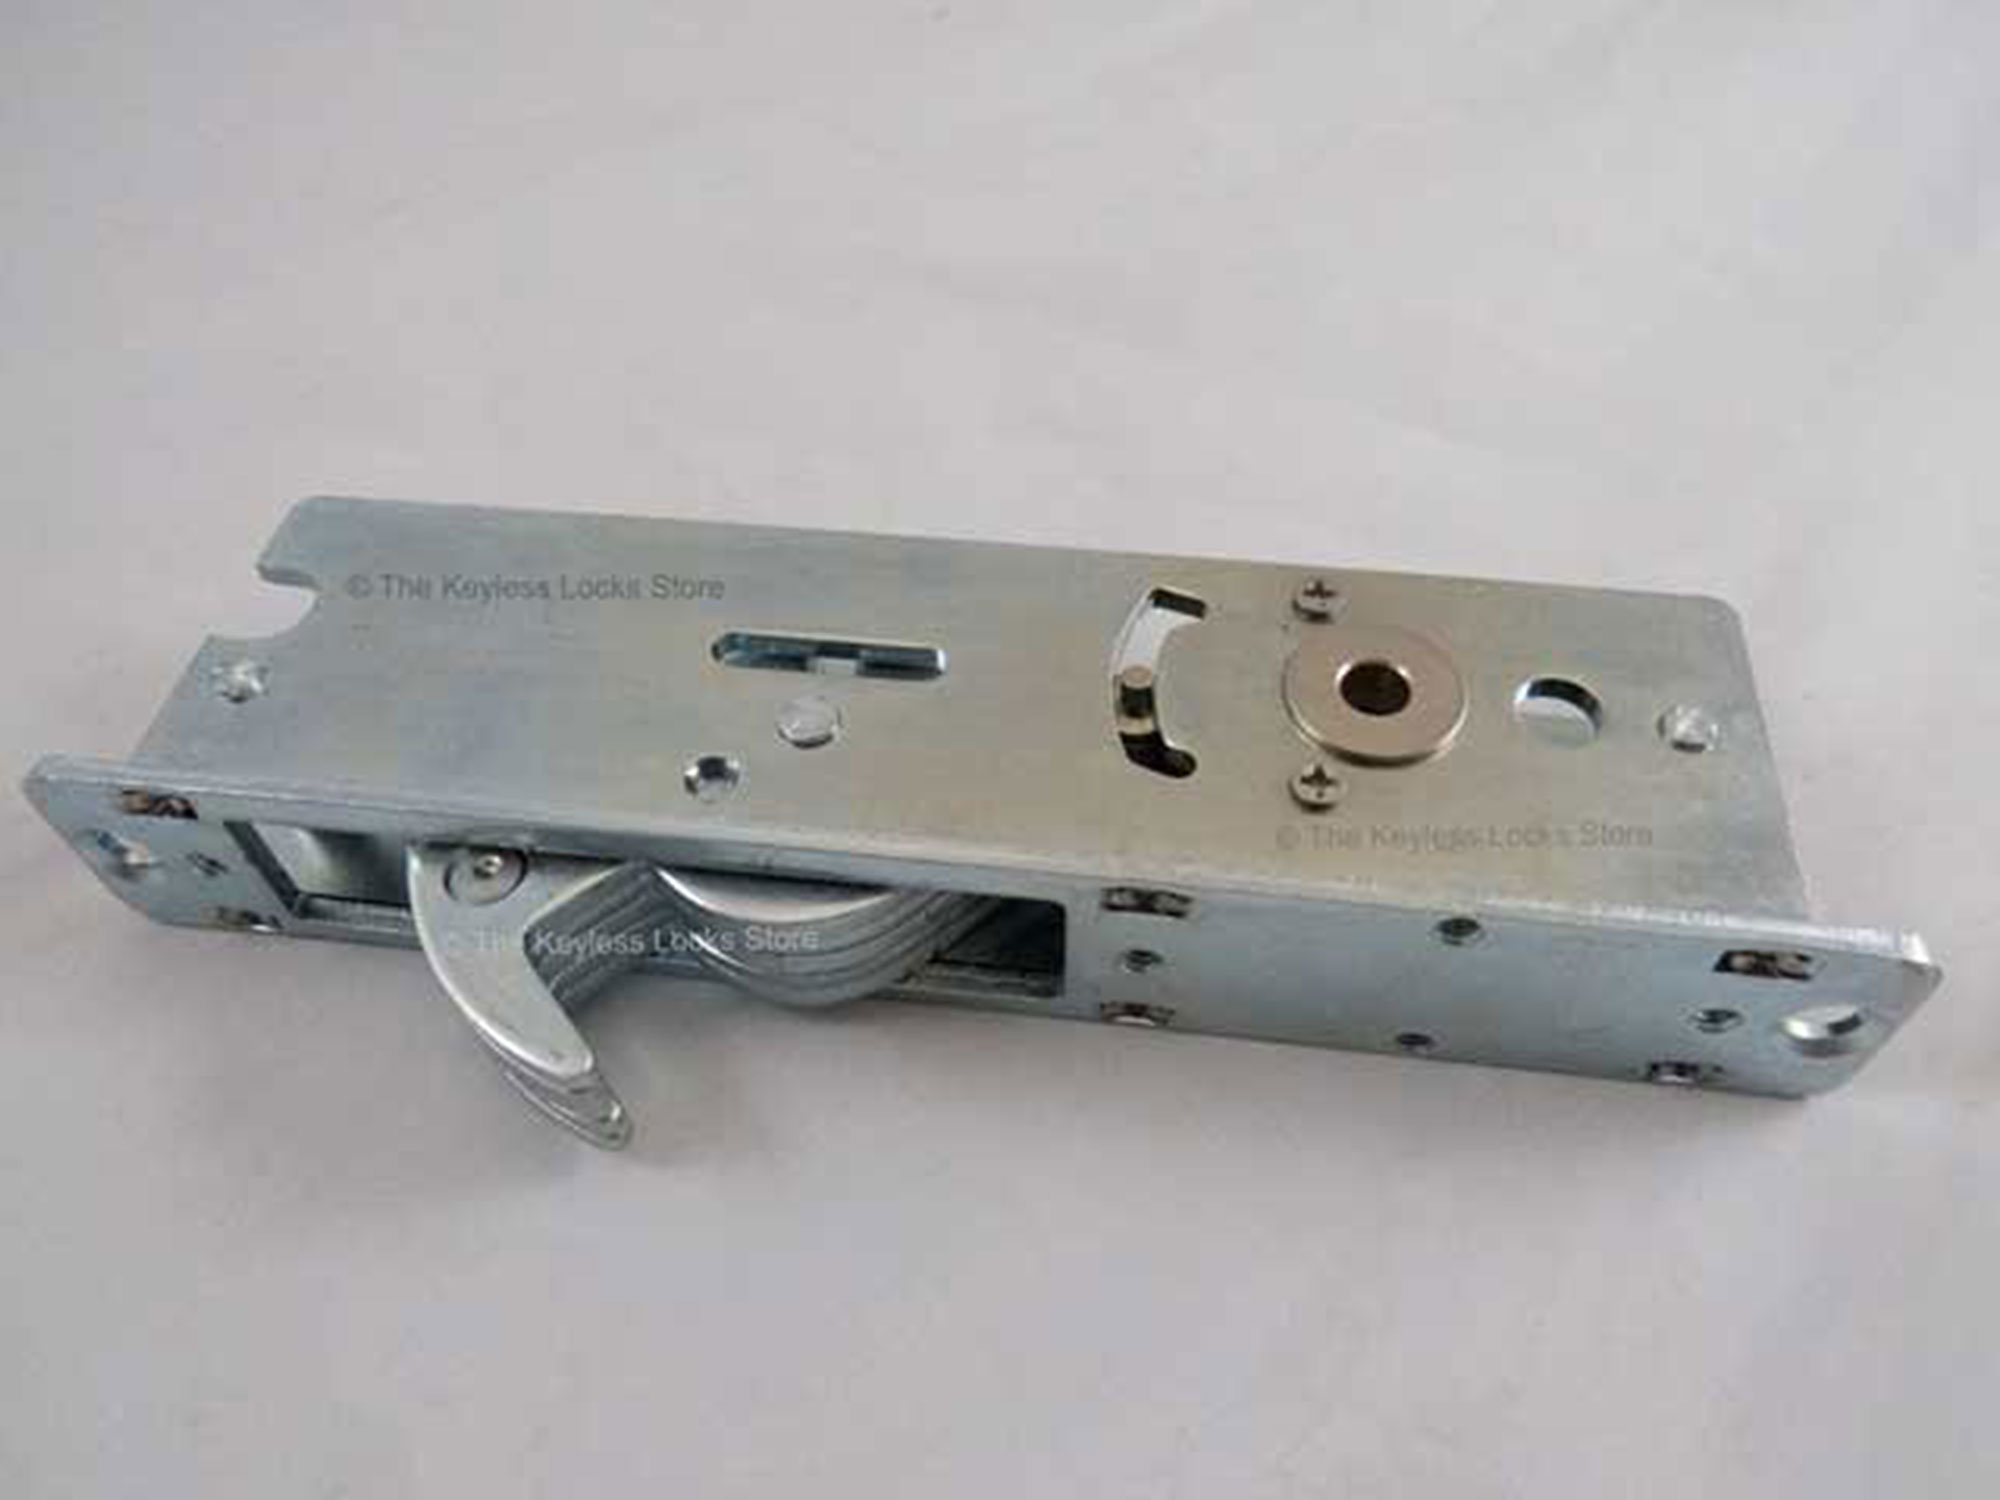 Lockey 2950 Narrow-Stile Hookbolt Keypad Lock